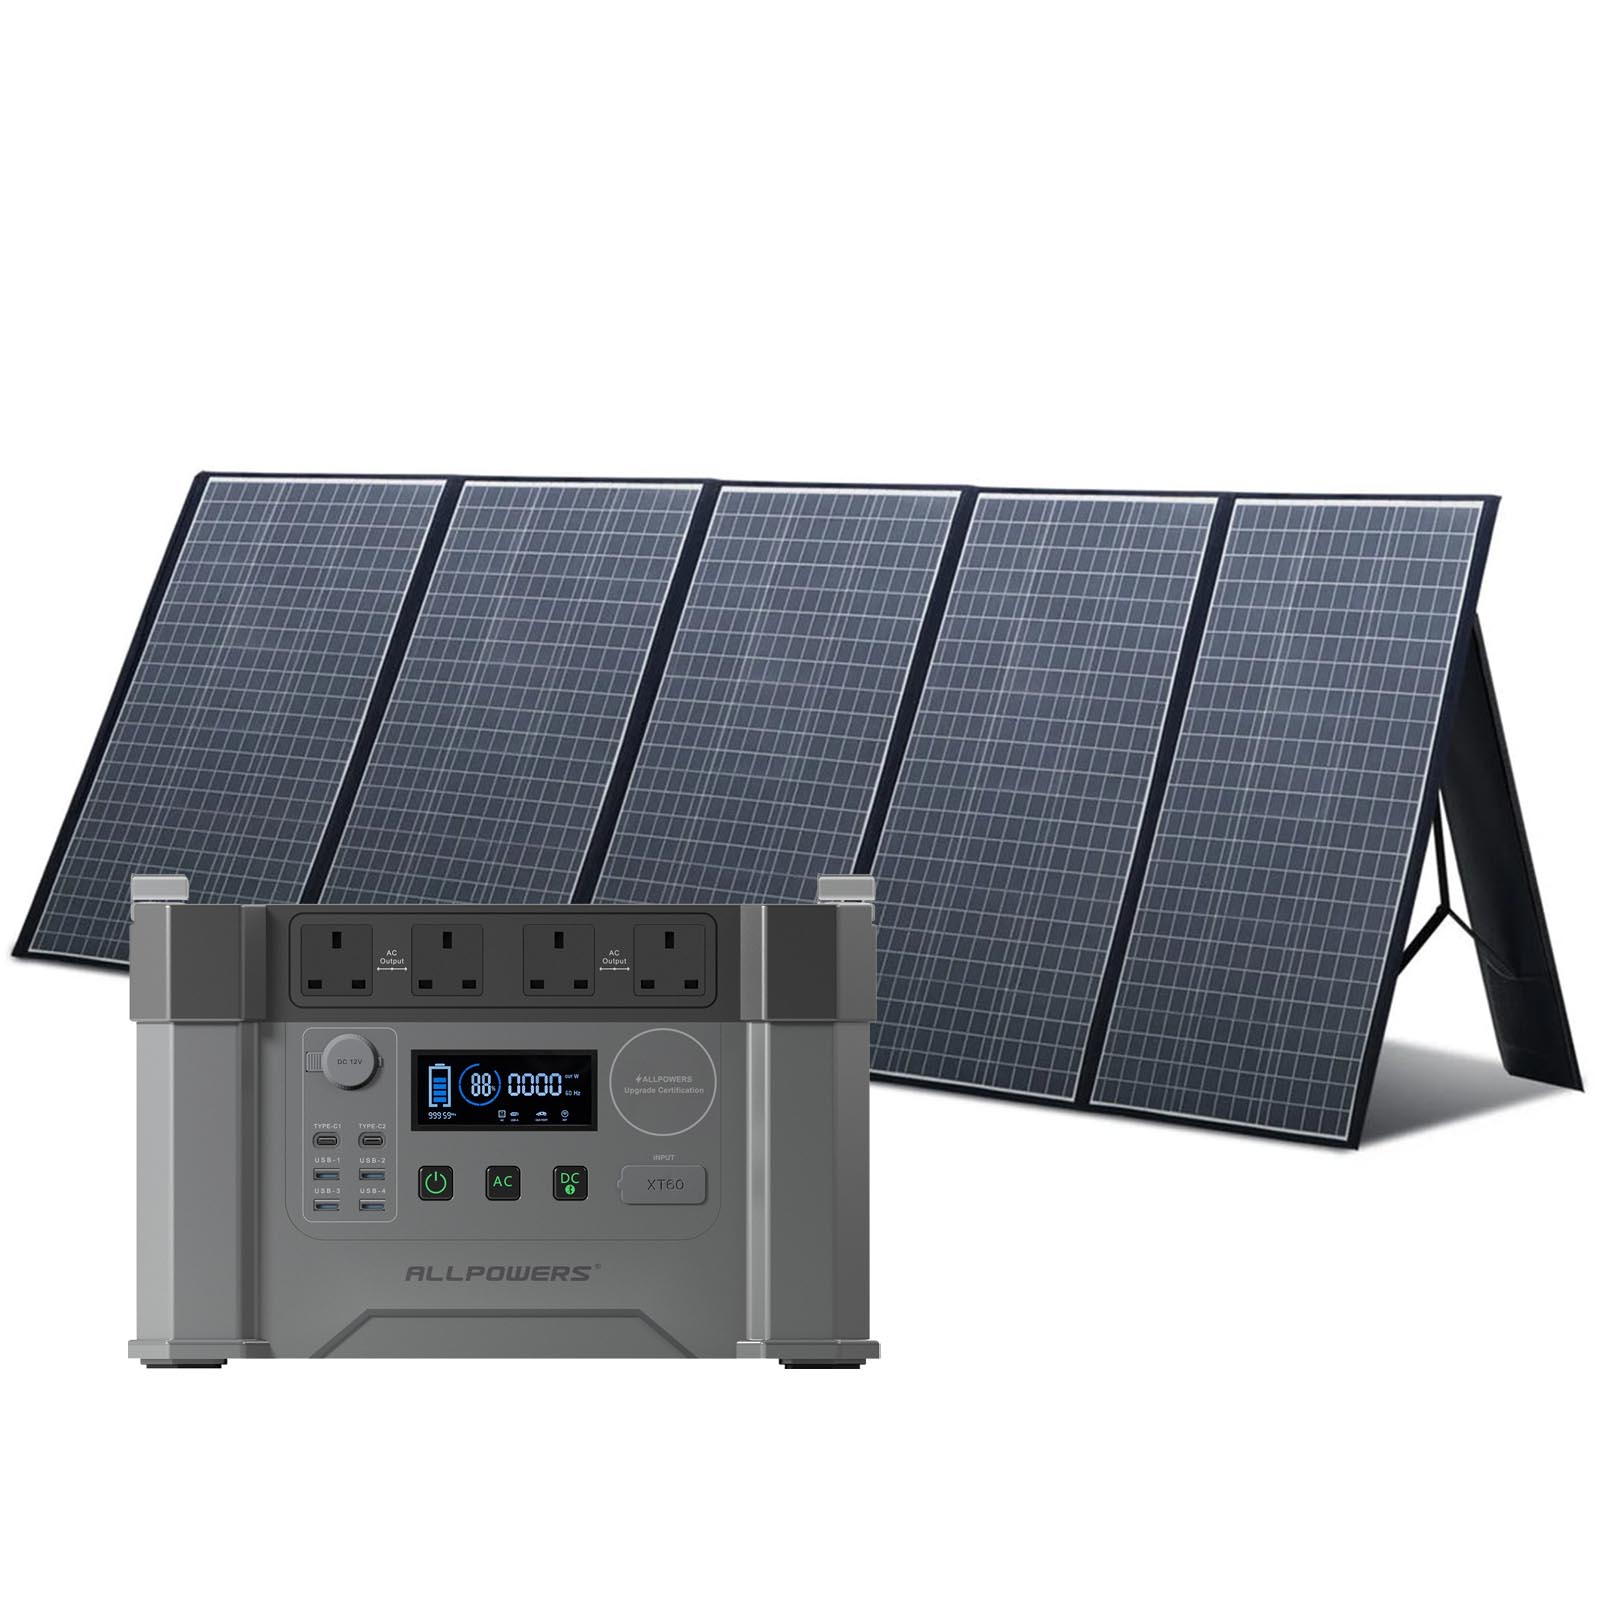 S2000-1-sp037-solar-generator-kit.jpg